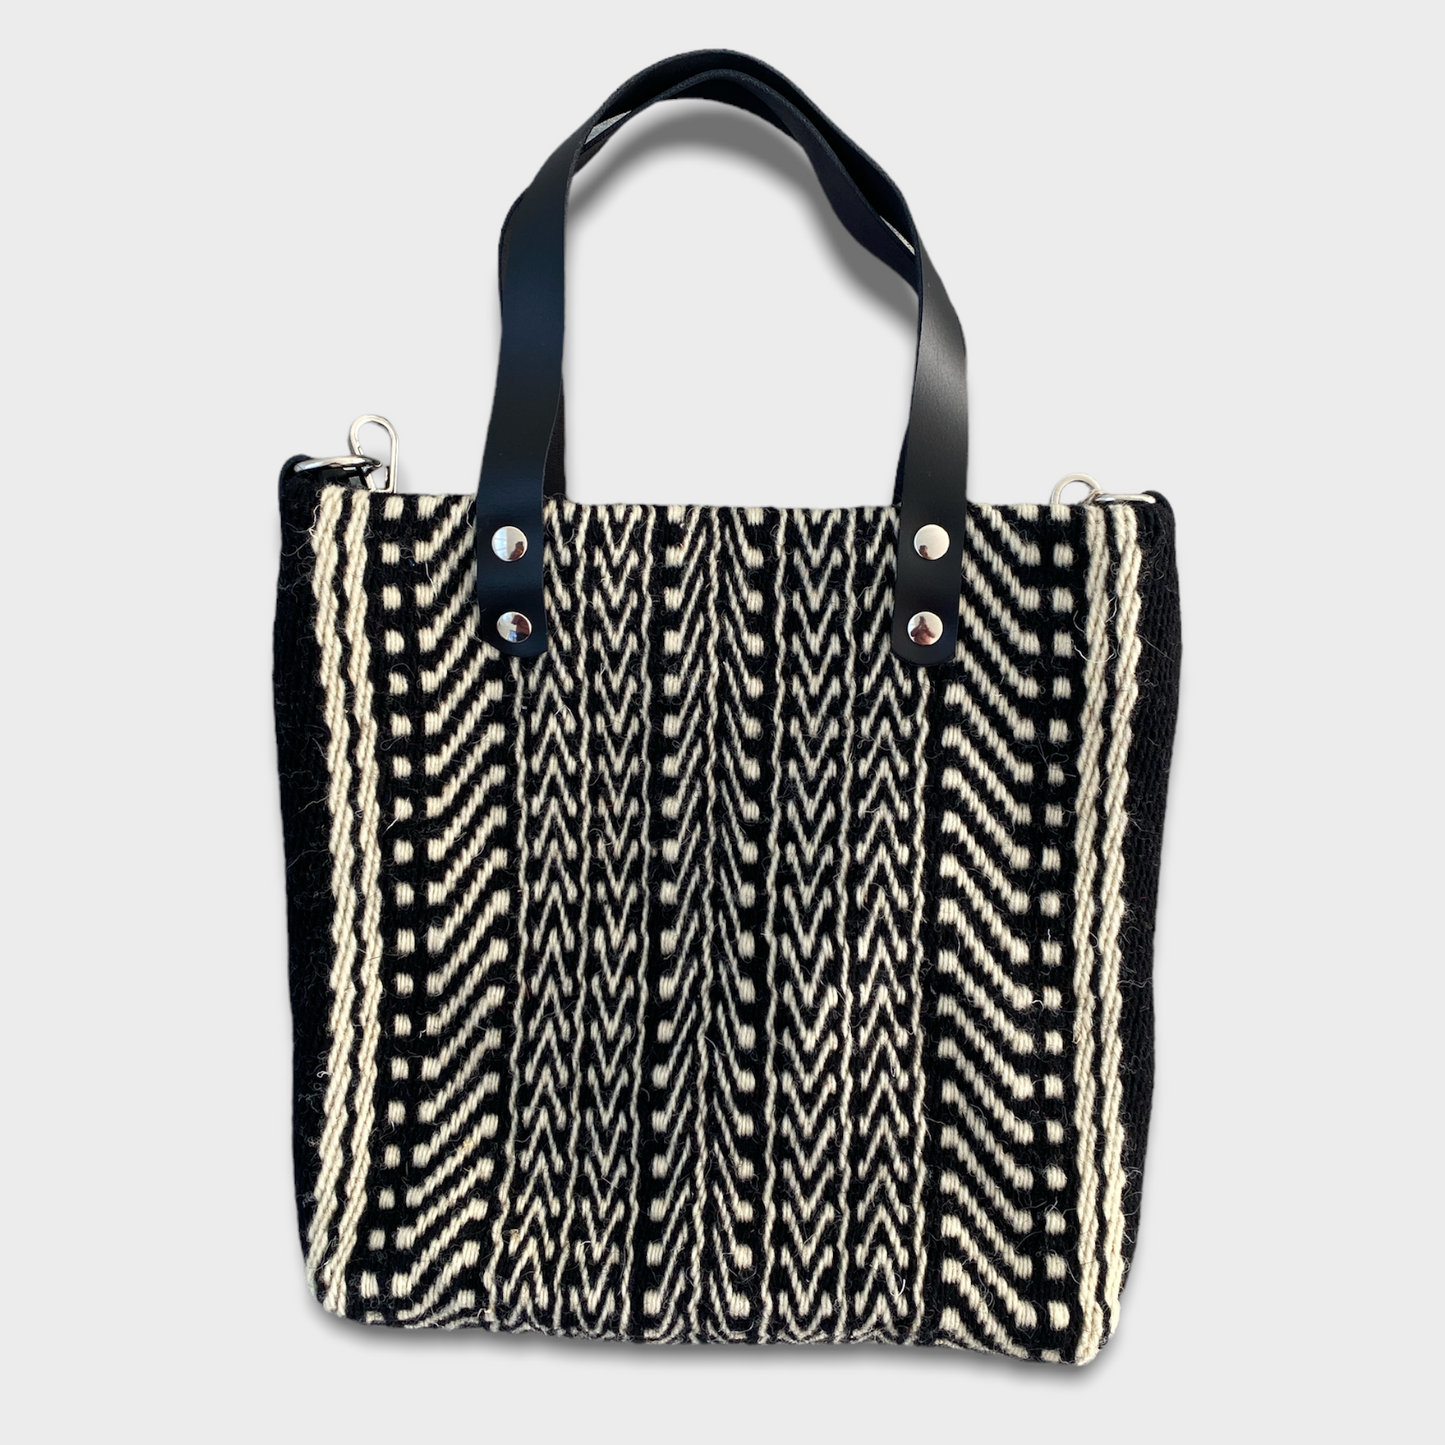 FABRICAAL // Leather Small Handbag "Amendoeira" Black/Ecru